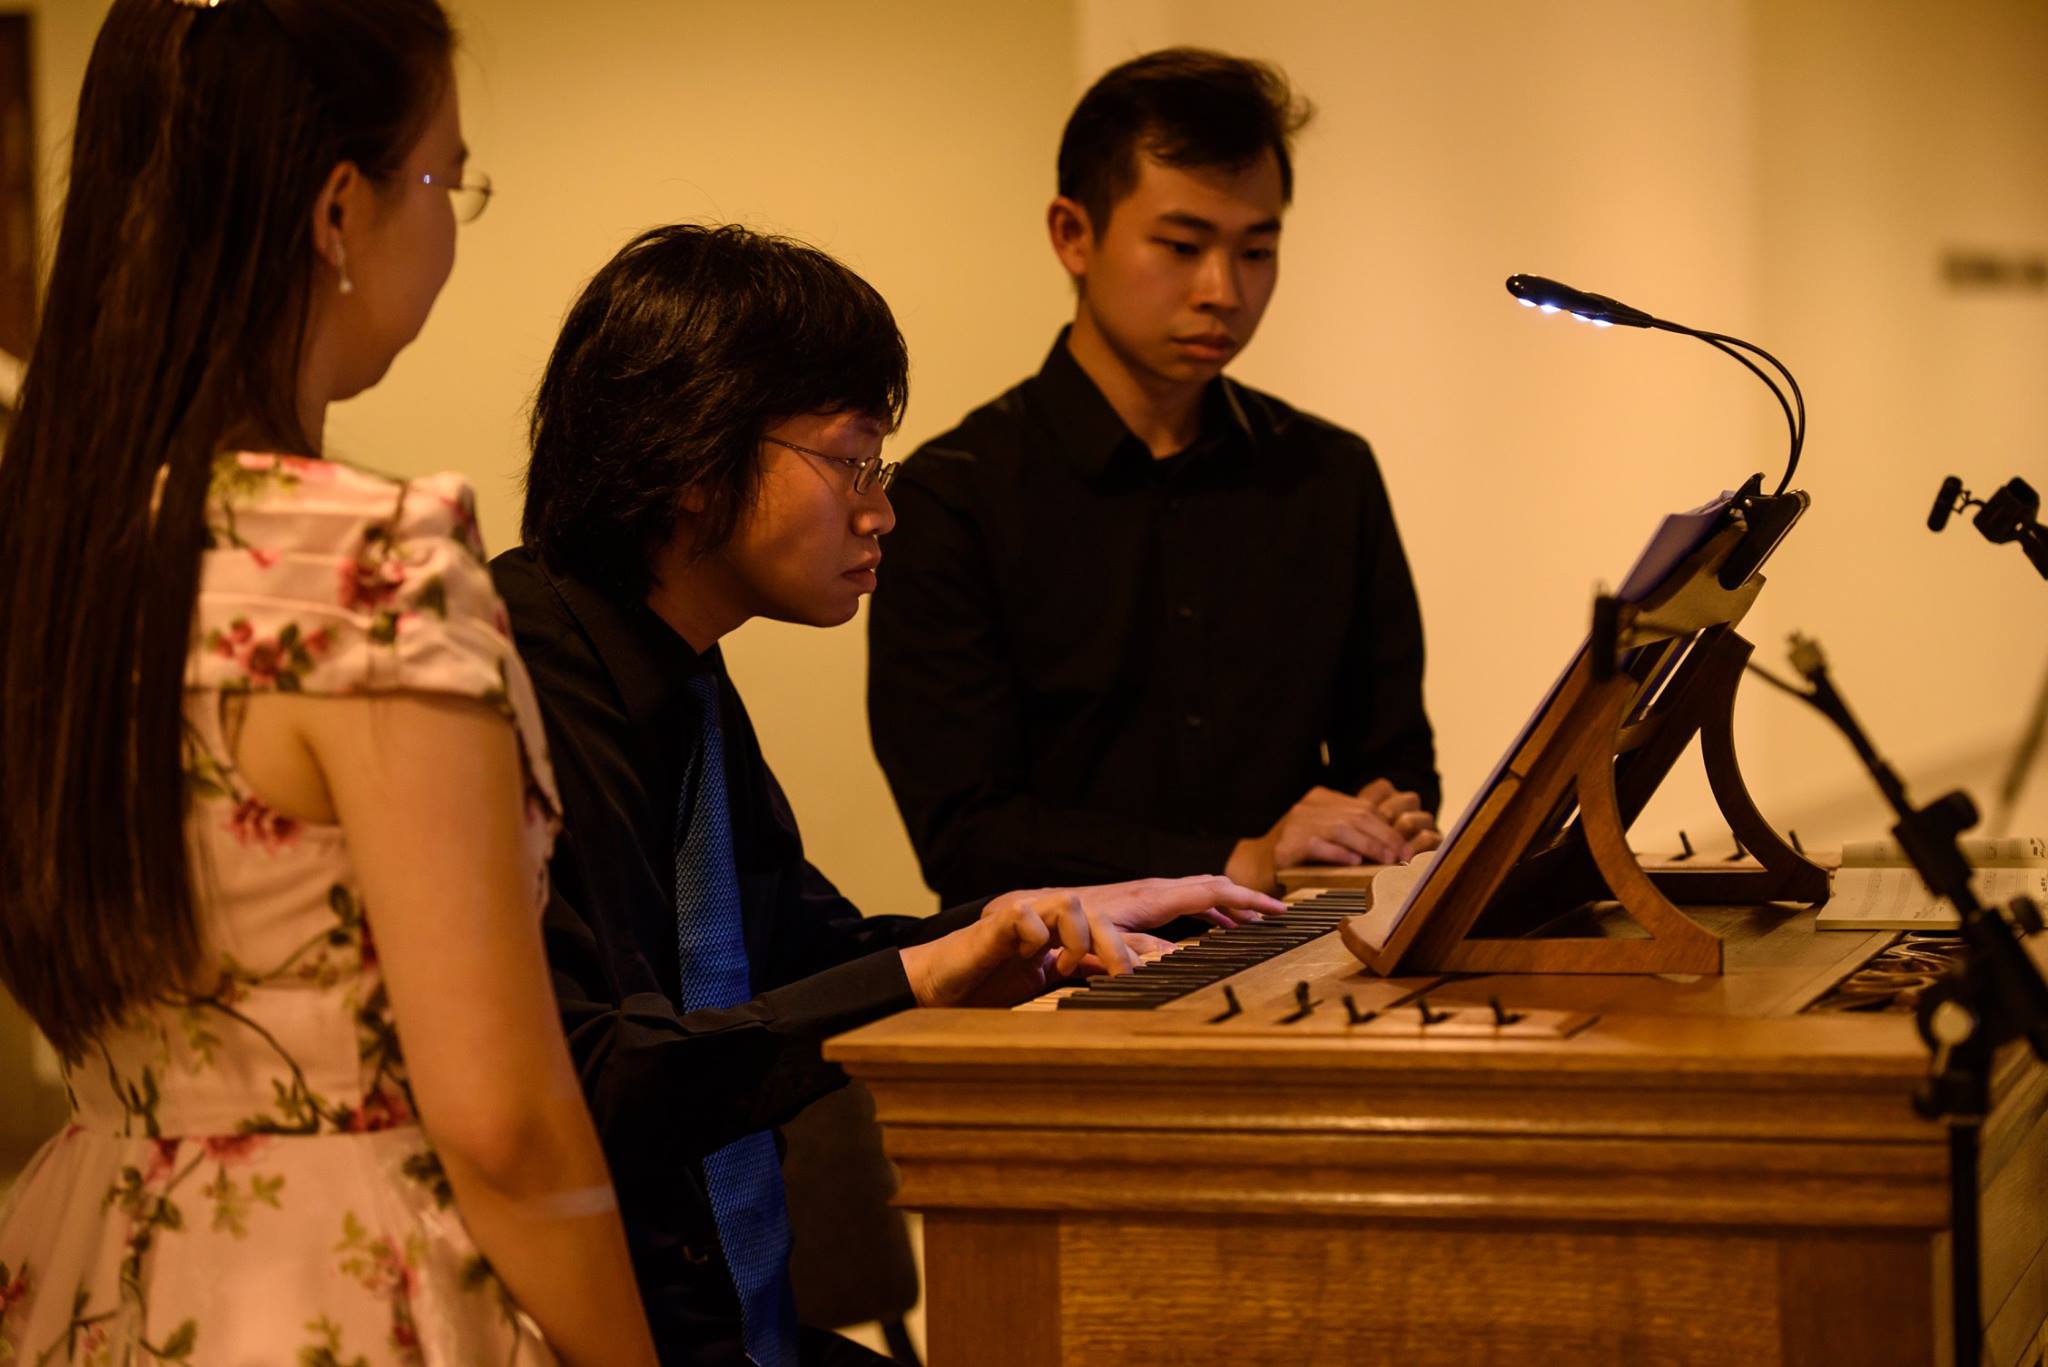 Phoon Yu playing the Yong Siew Toh Conservatory portative organ